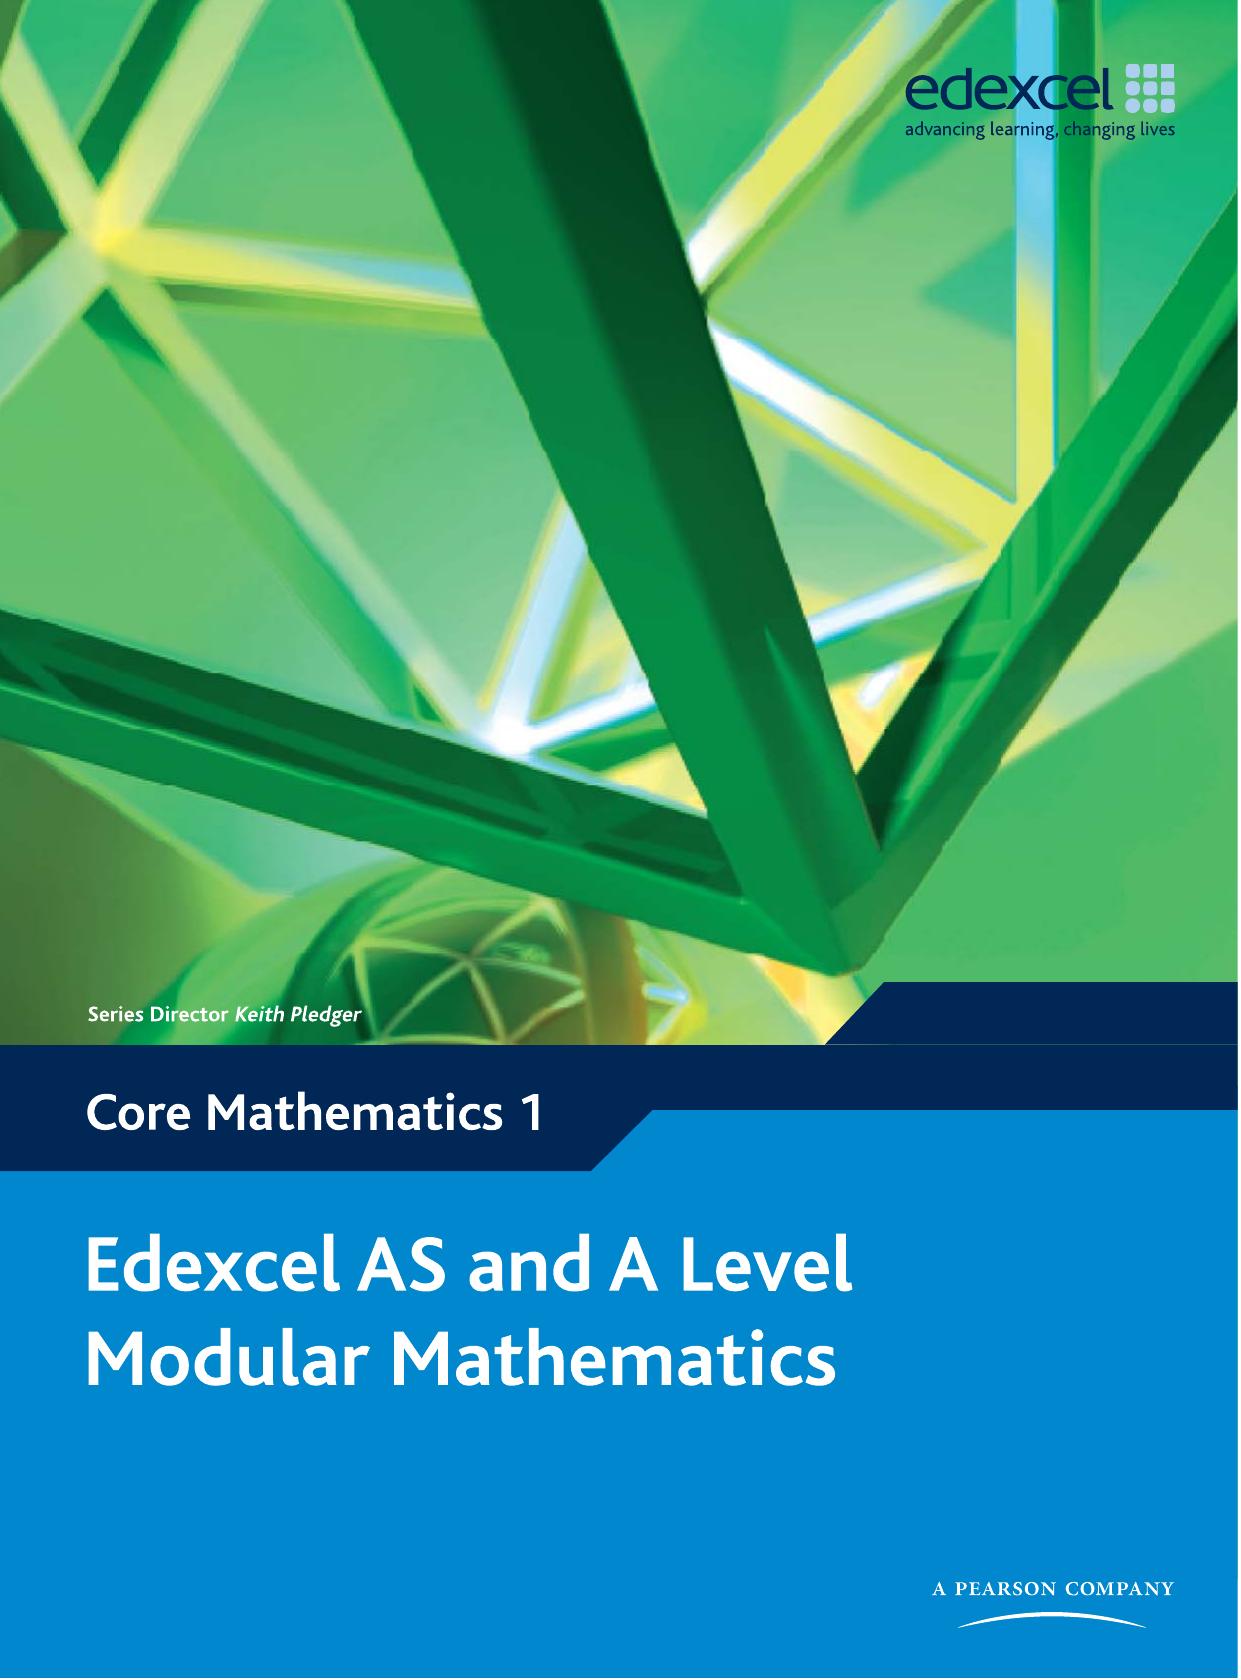 Edexcel AS and A level Modular Mathematics - Core Mathematics 1